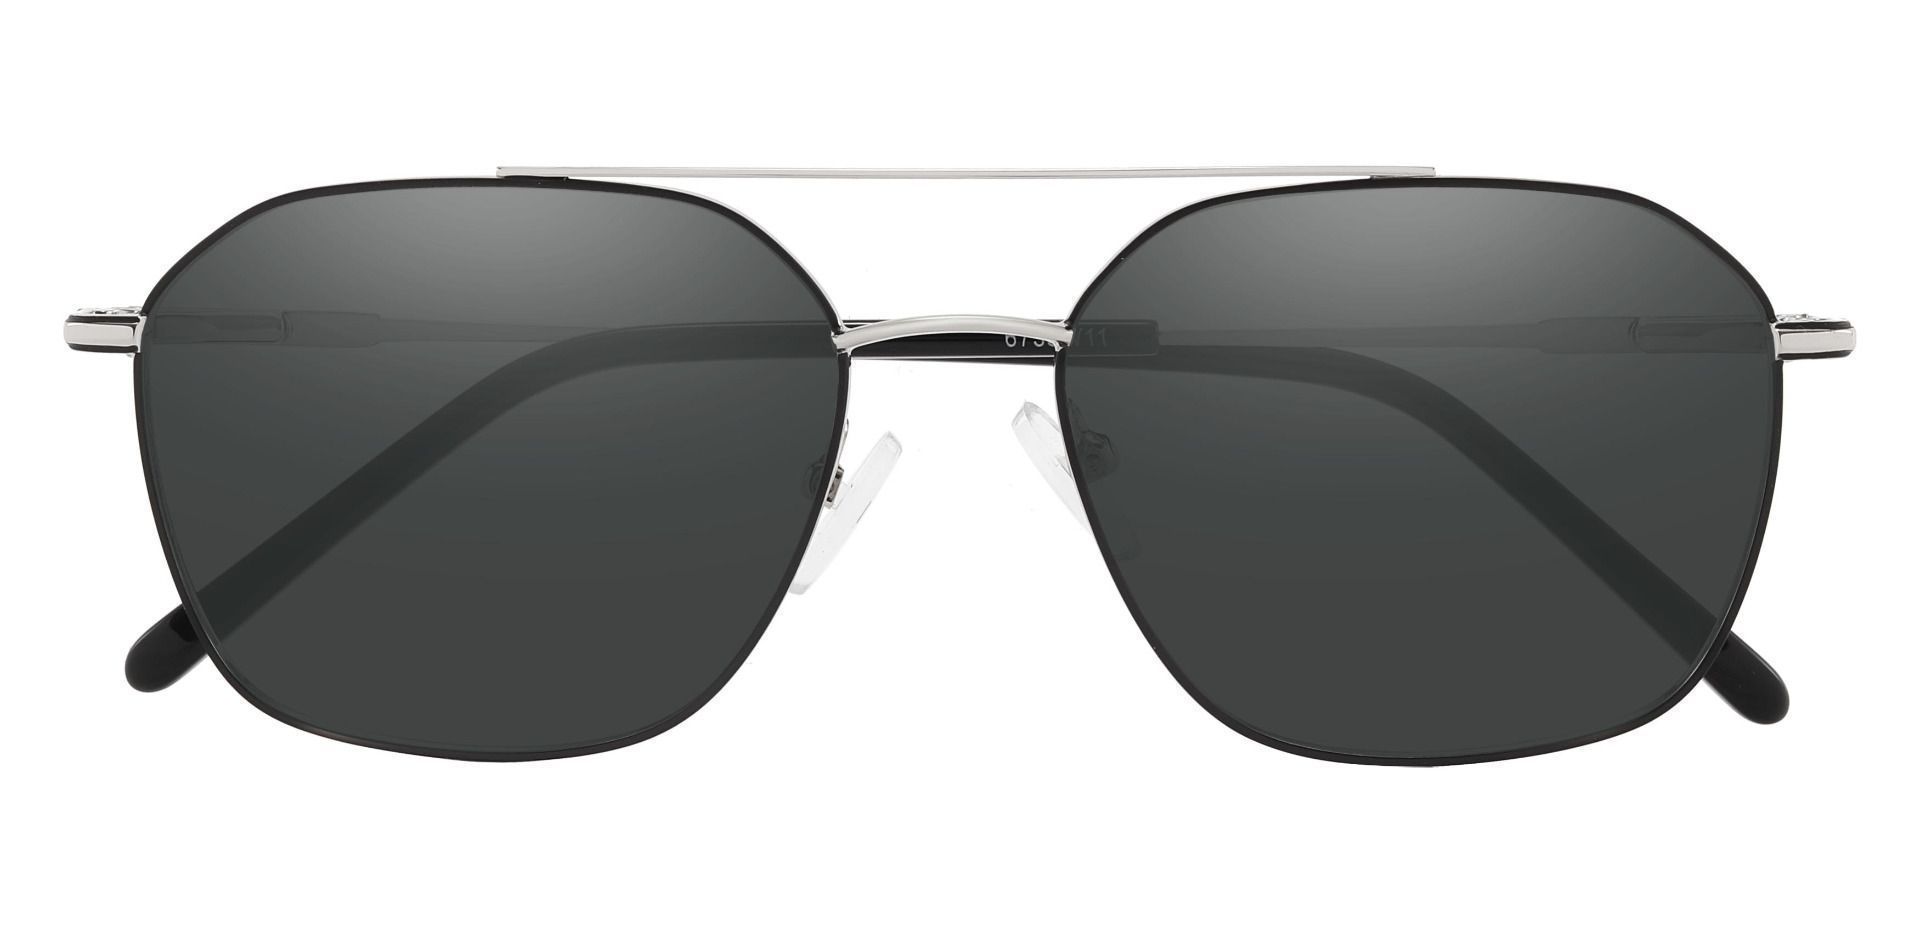 Harvey Aviator Progressive Sunglasses - Silver Frame With Gray Lenses